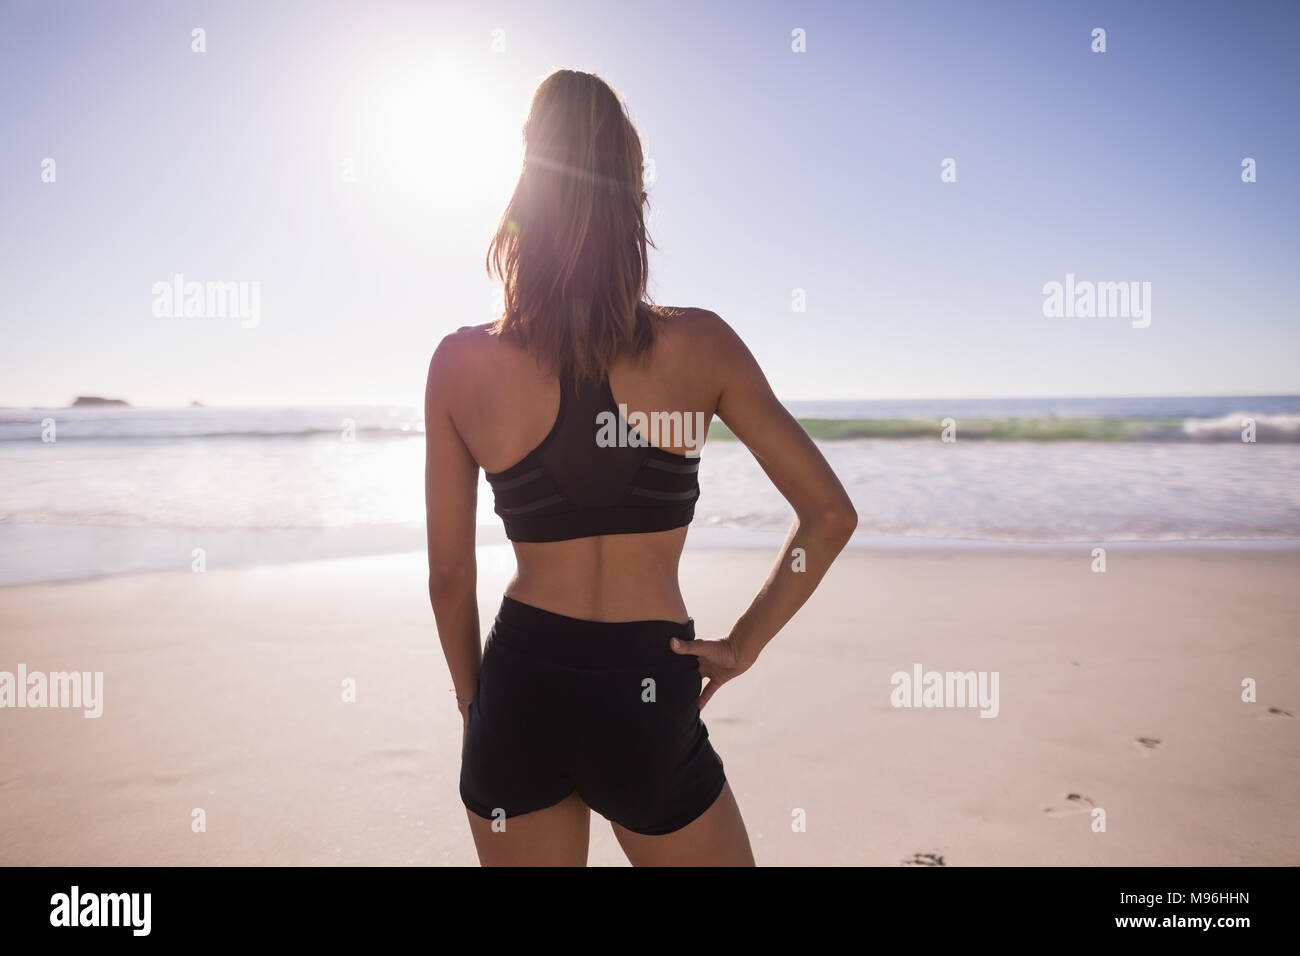 Fit woman standing with hand on hip dans la plage Banque D'Images